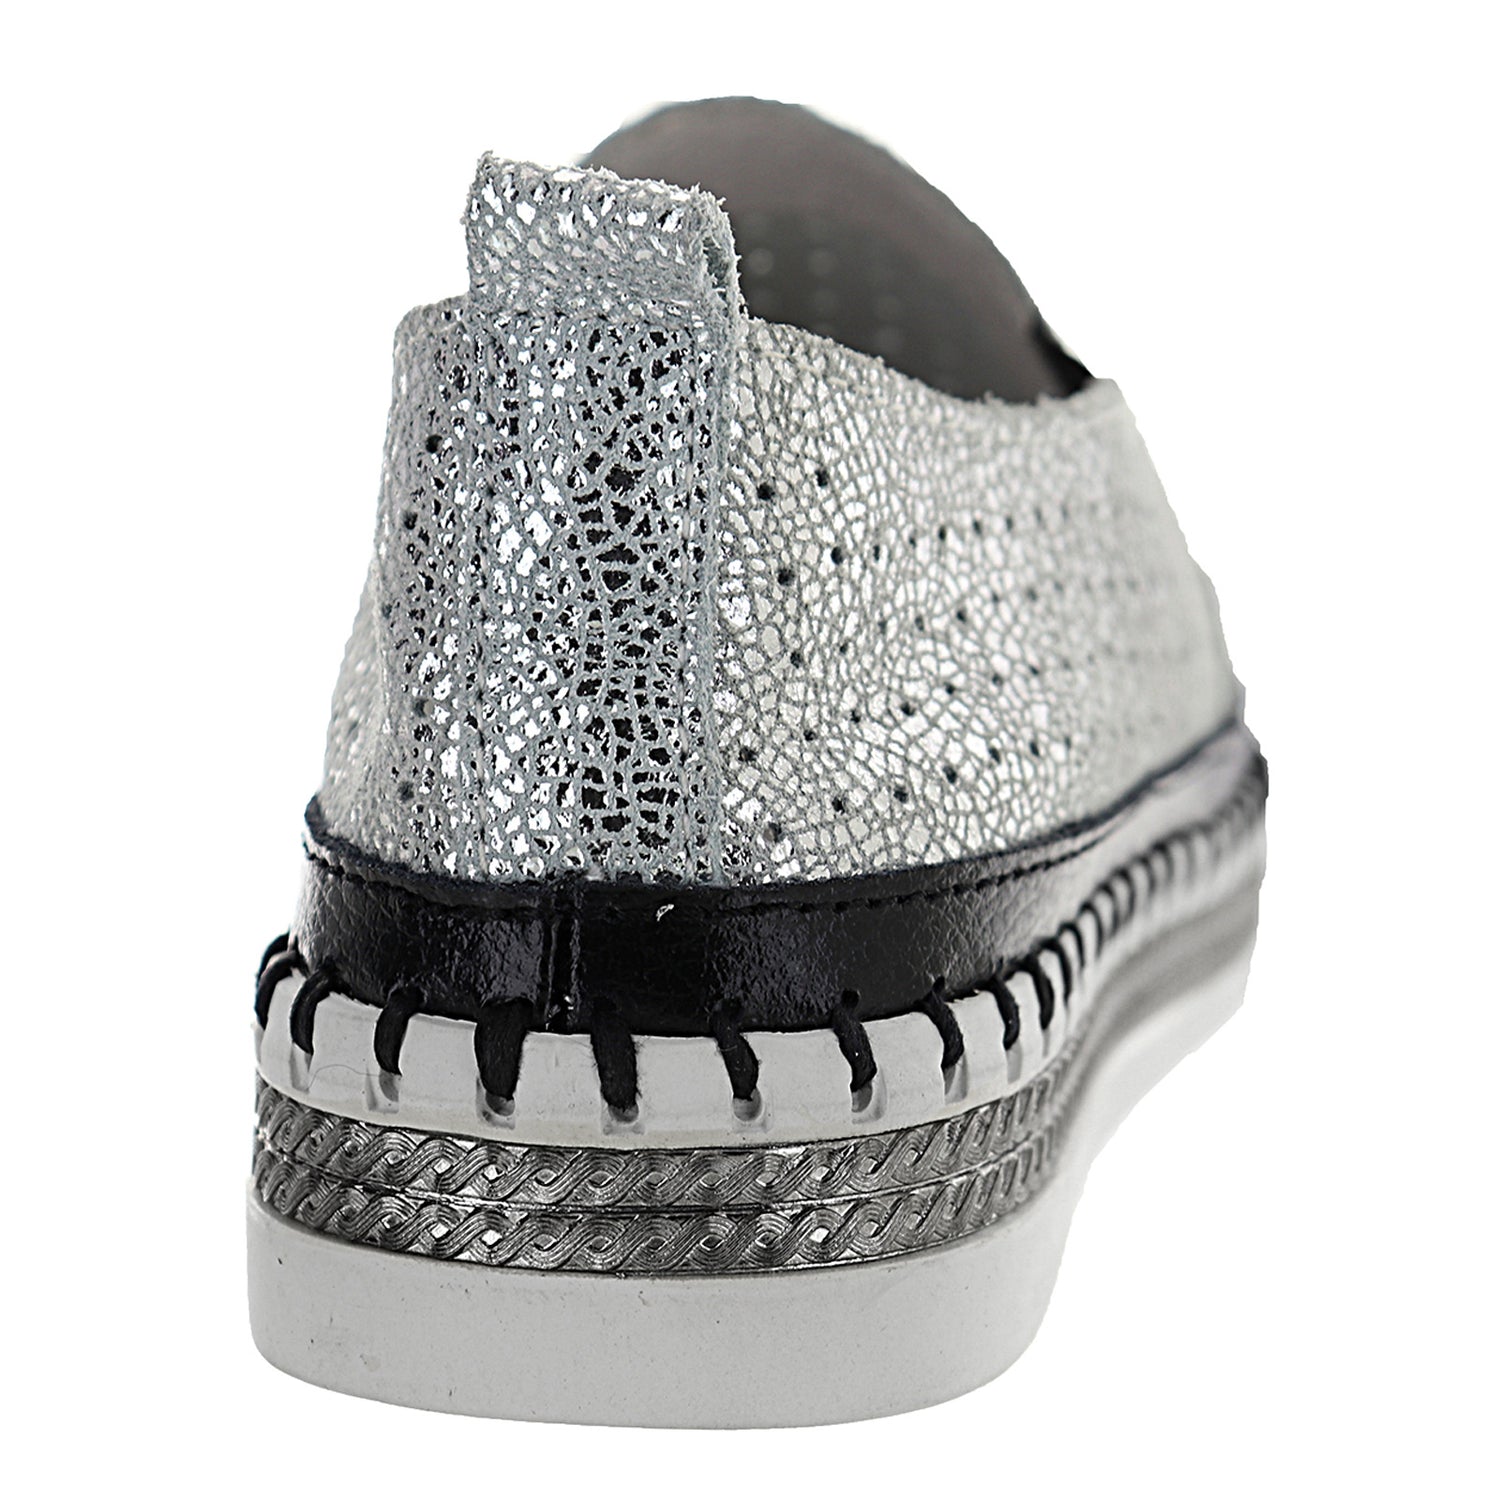 Peltz Shoes  Women's Bernie Mev TW140 Slip-On Silver Black TW140-BLK SIL